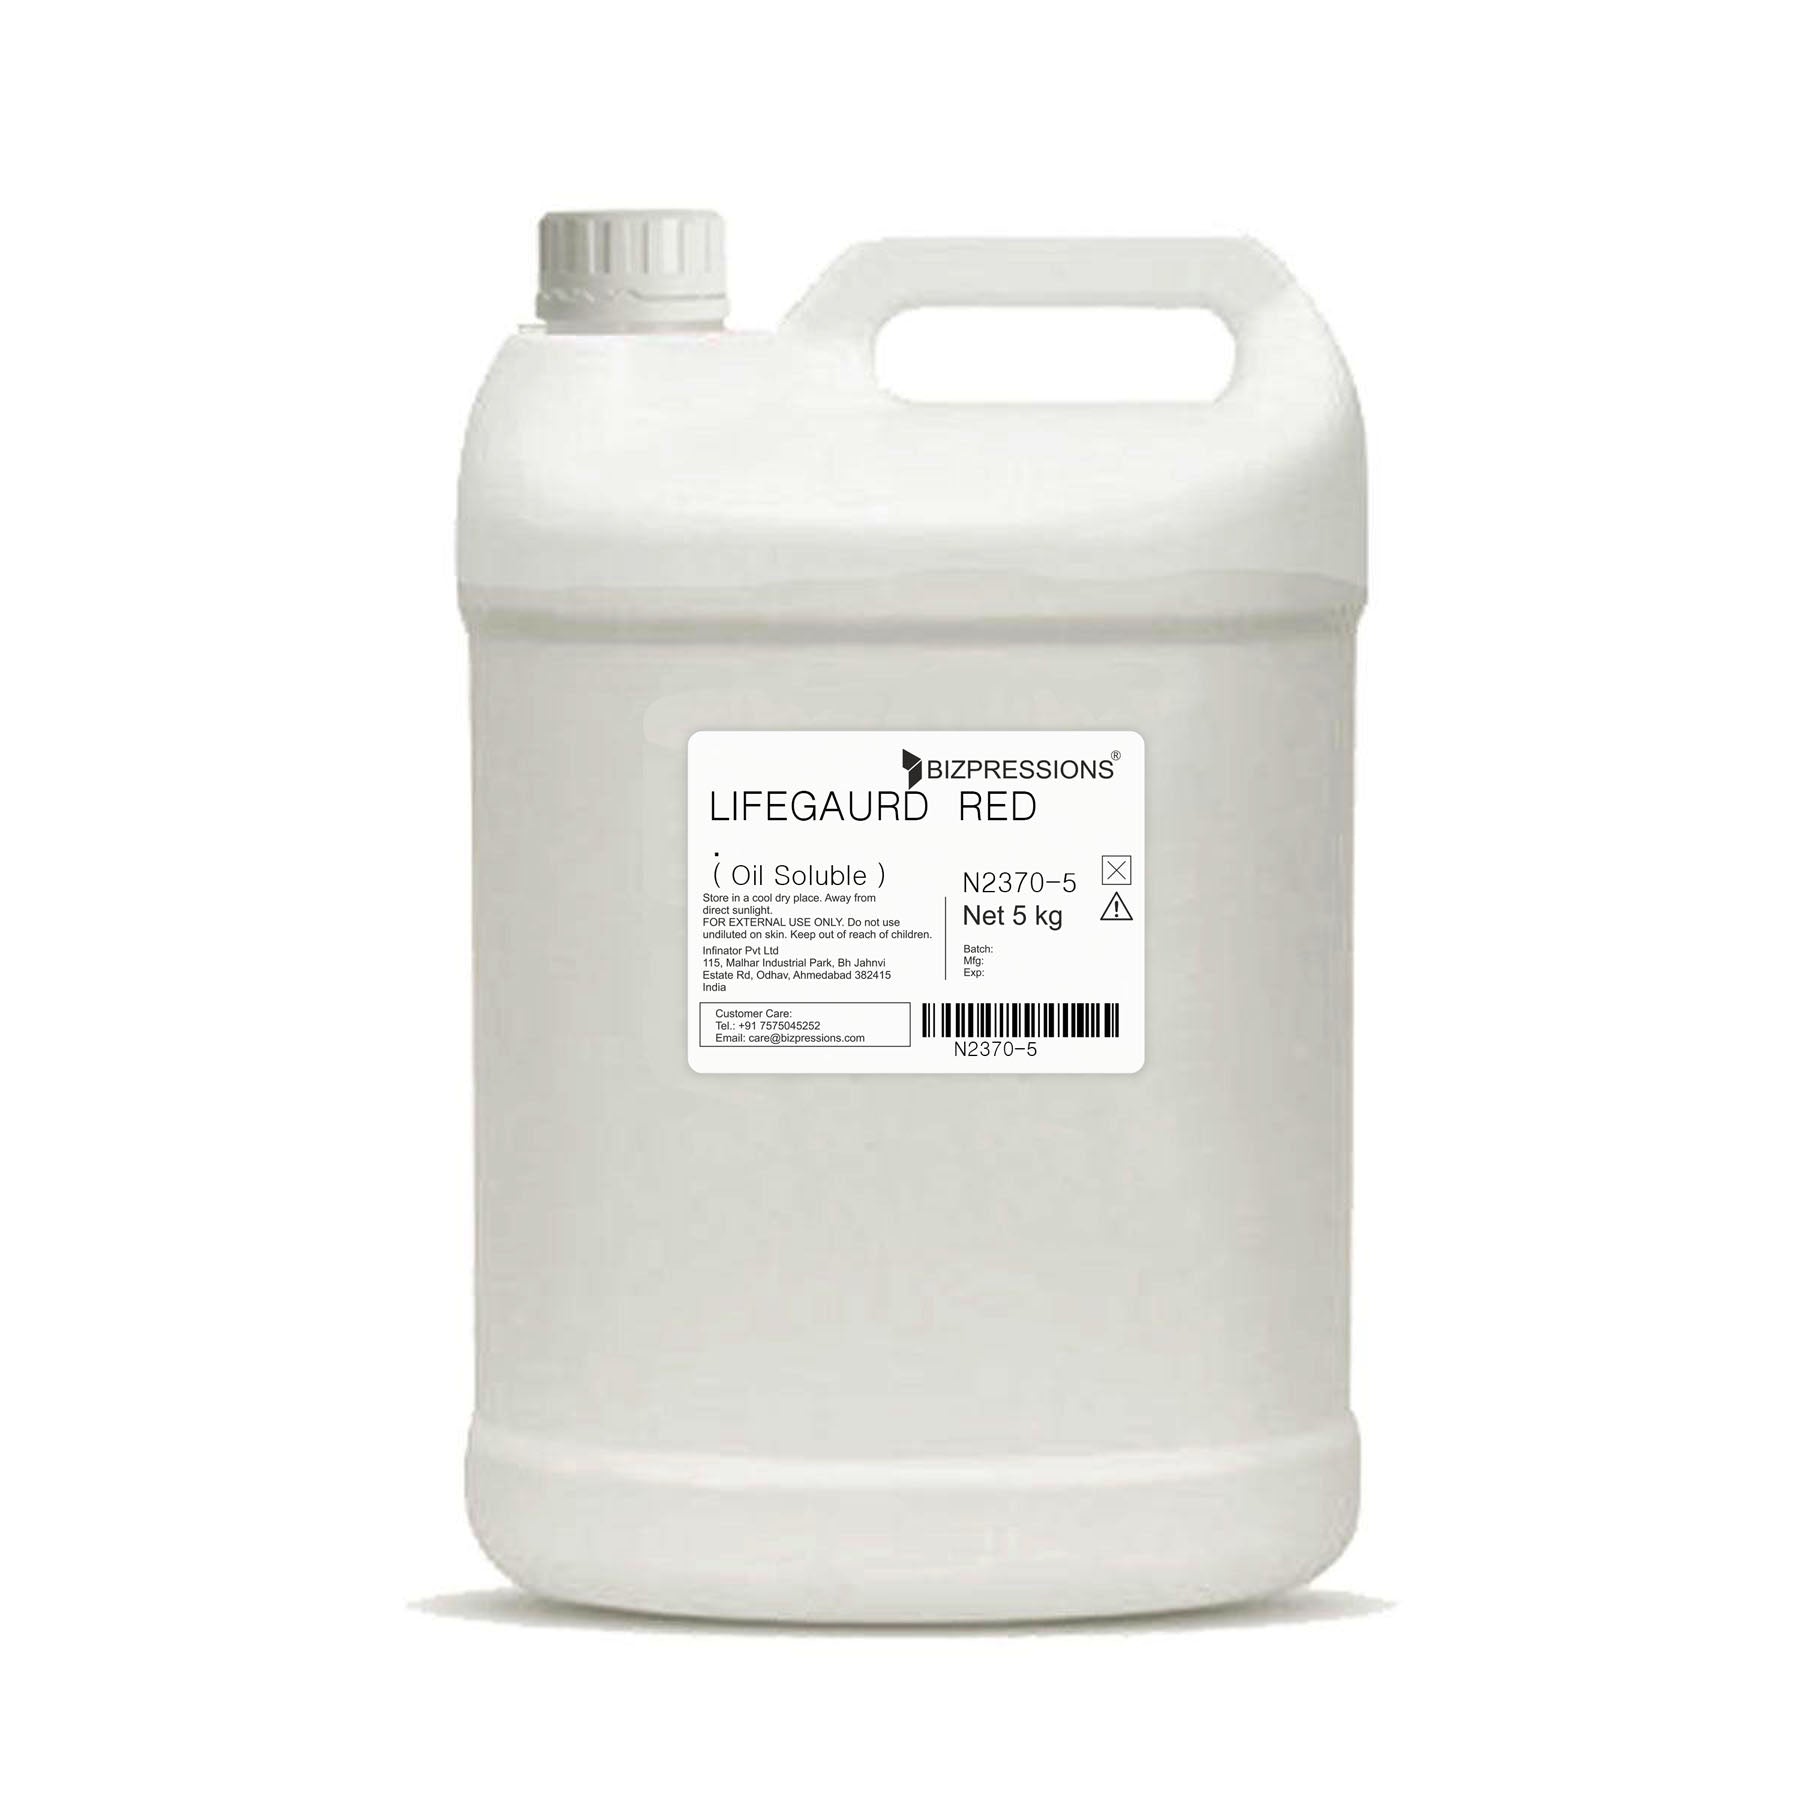 LIFEGAURD RED - Fragrance ( Oil Soluble ) - 5 kg